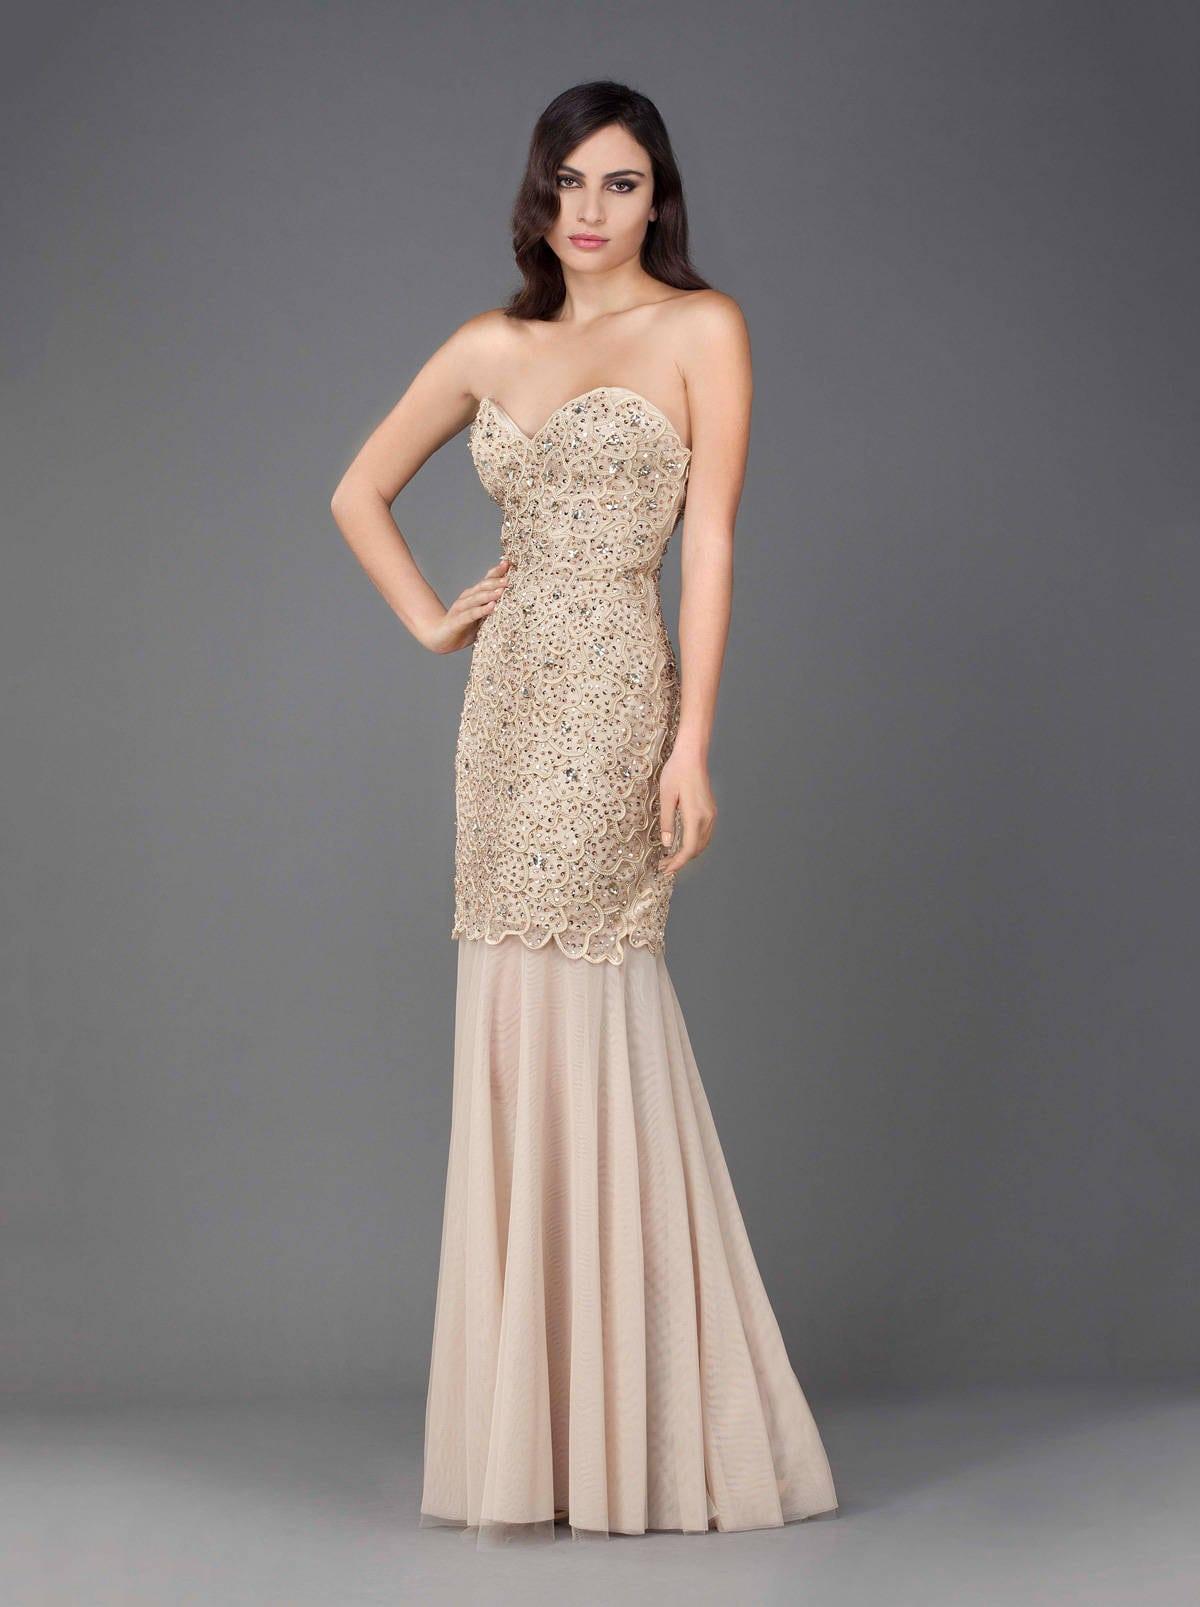 ABELLA | High Neck Illusion Silk Crepe Champagne Formal Dress | Champagne  formal dresses, Nice dresses, Designer bridal gowns